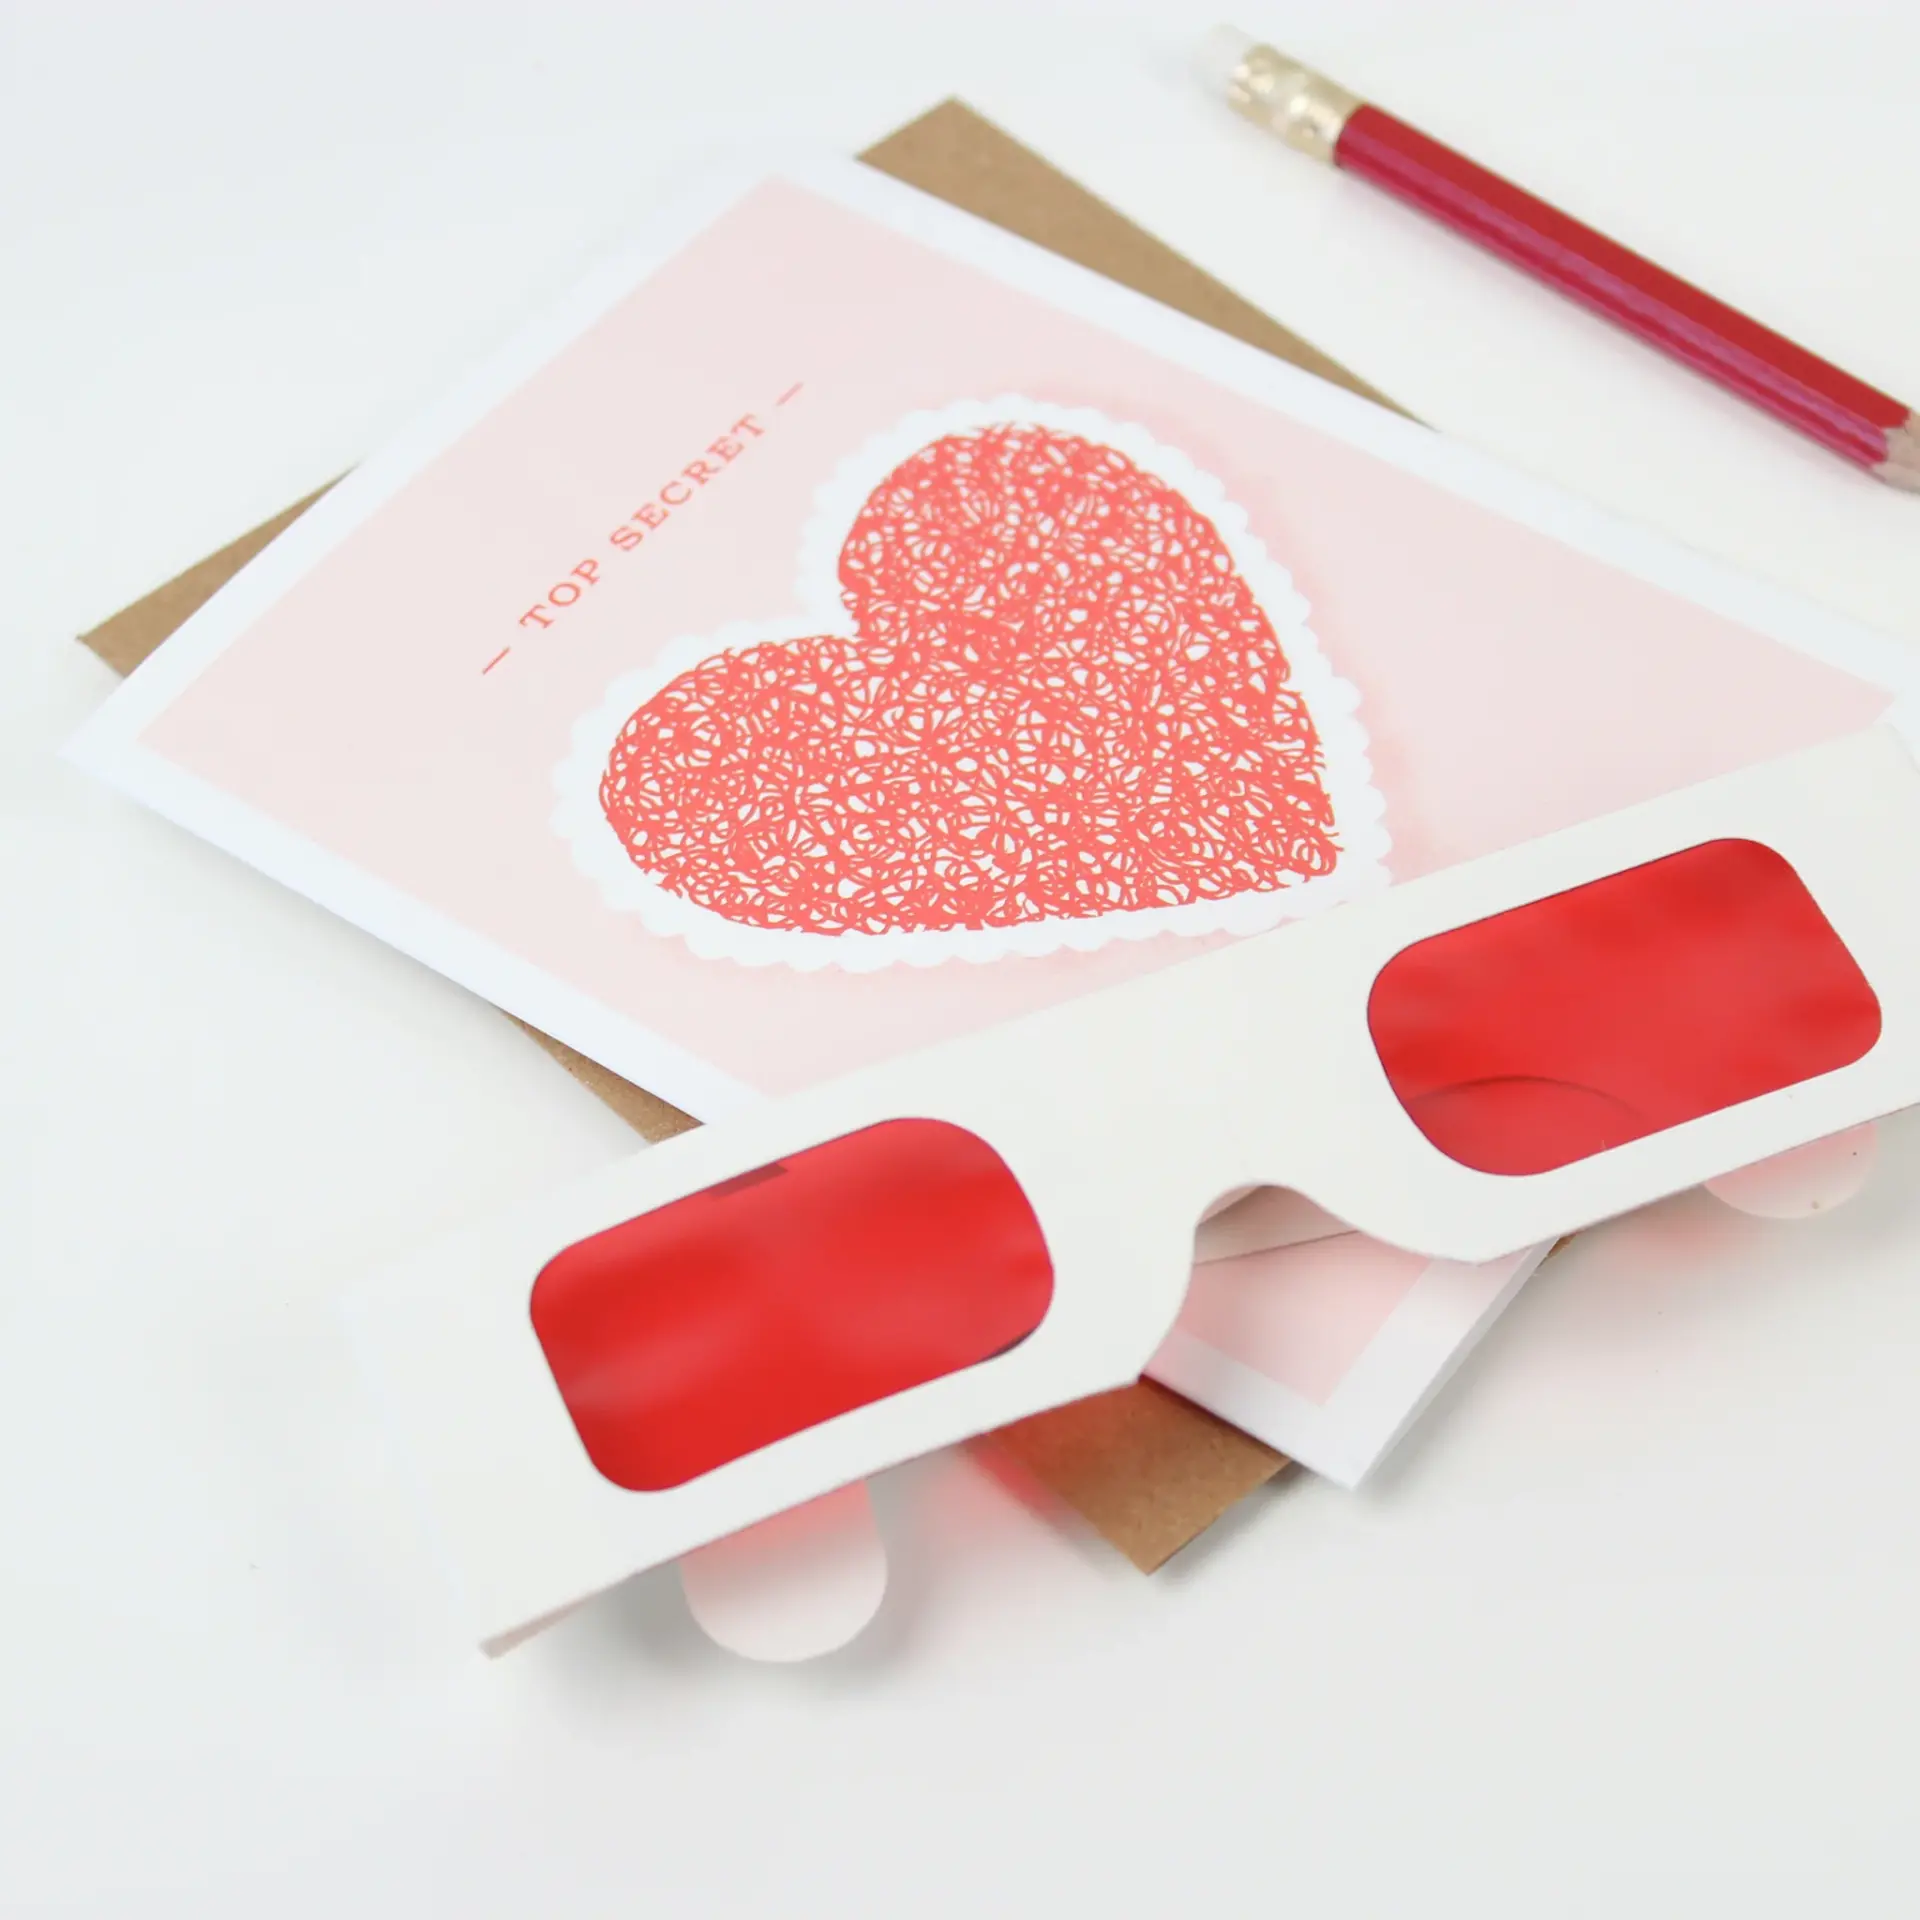 Blogduwebdesign inspiration cartes saint valentin originales top secret